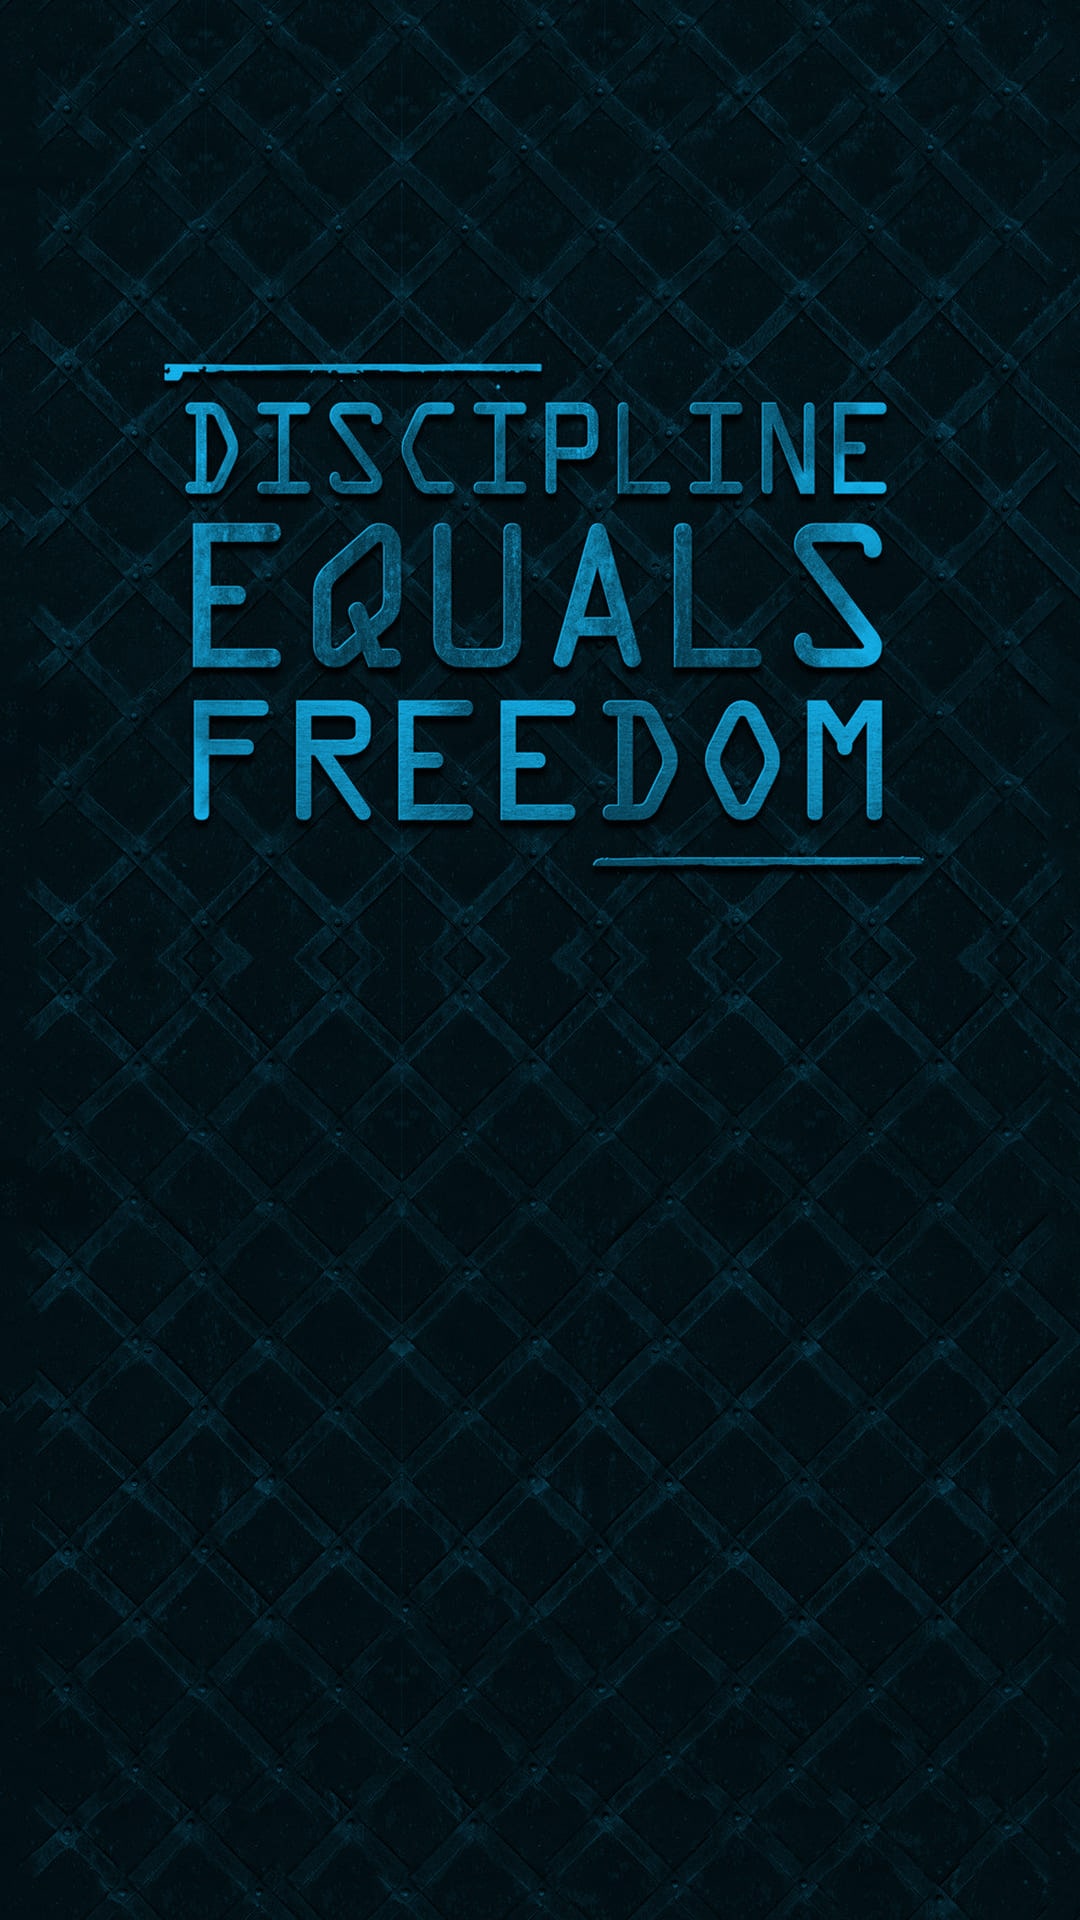 Download Discipline Equals Freedom Wallpaper  Wallpaperscom